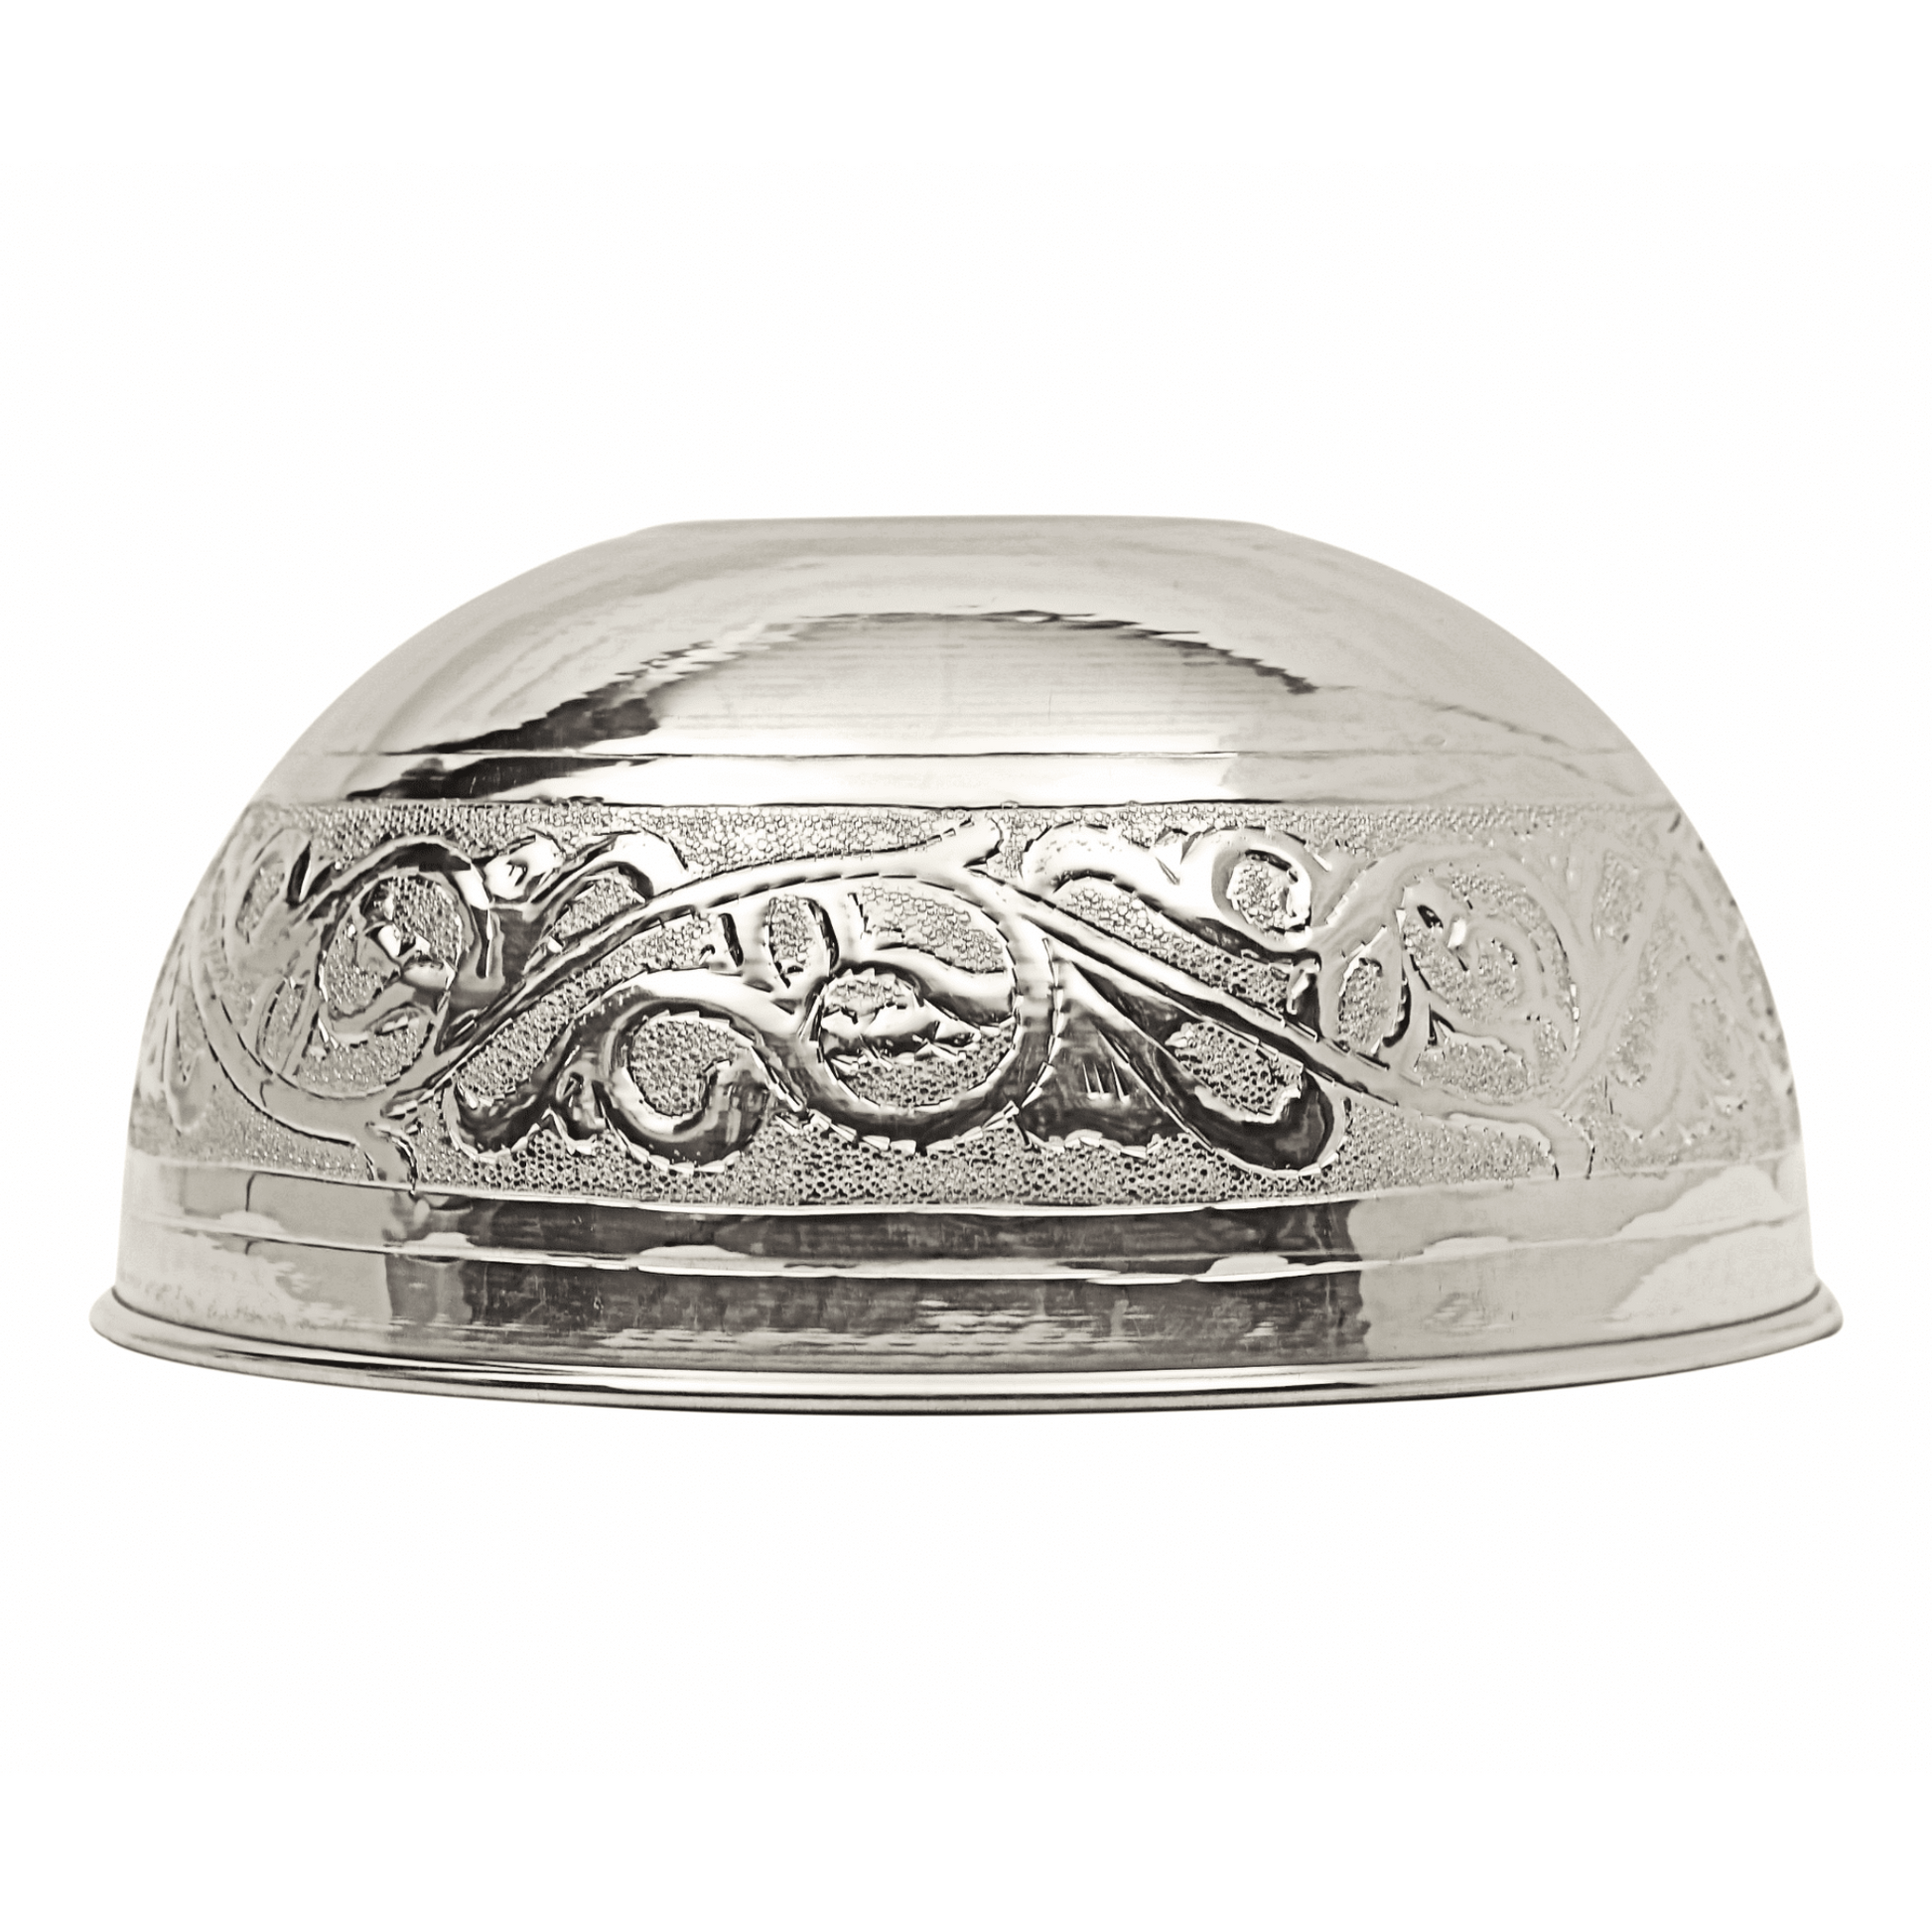 moroccan-hammam-bowl-silver-maillechort-vintage-design-hand-engraved-in-morocco